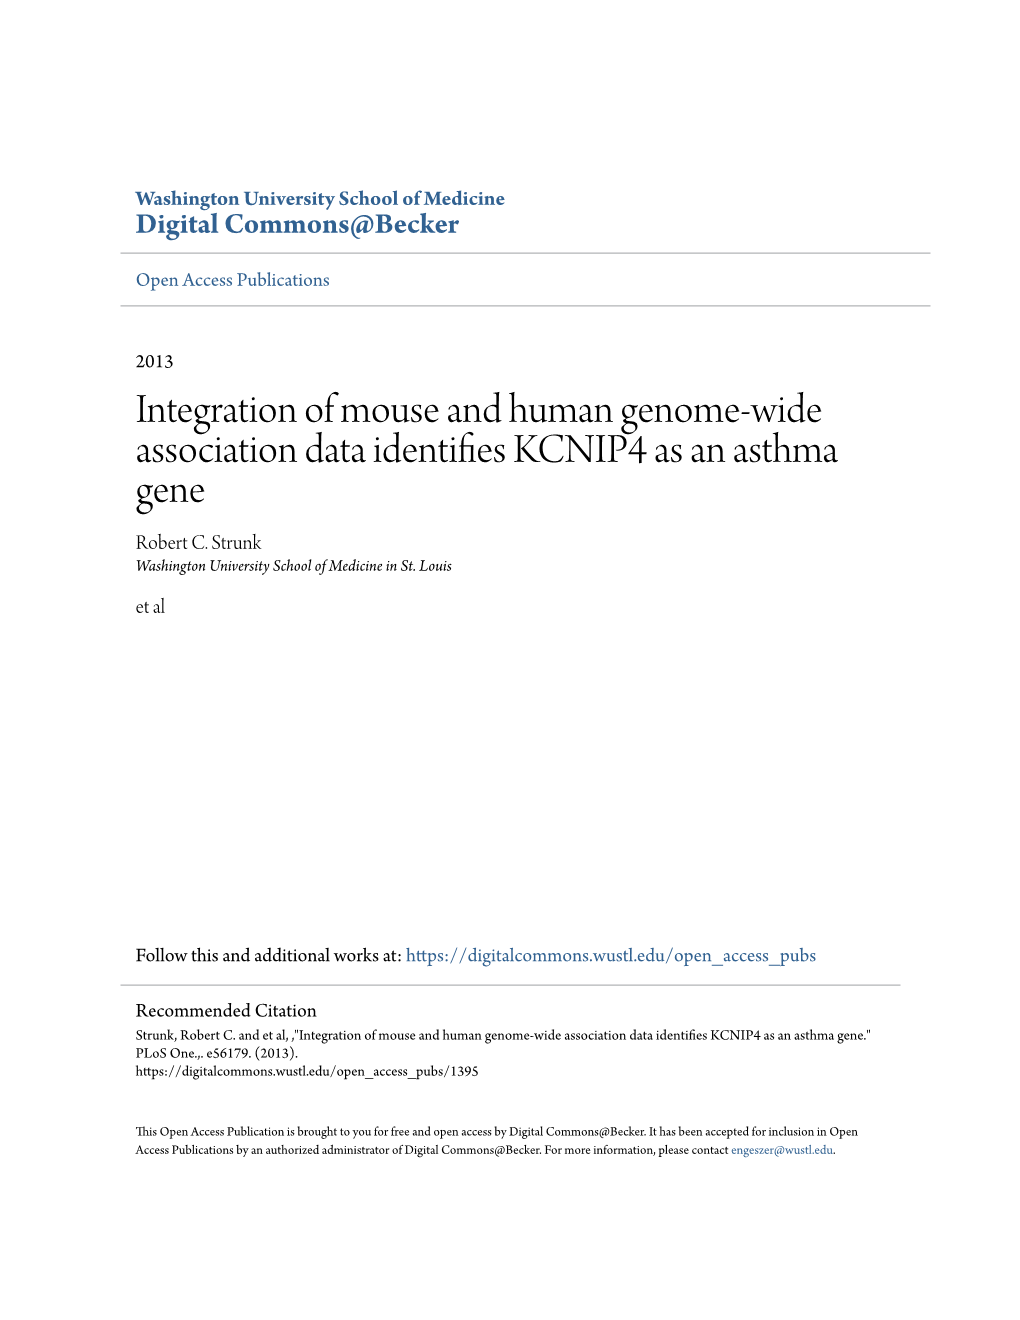 Integration of Mouse and Human Genome-Wide Association Data Identifies CK NIP4 As an Asthma Gene Robert C